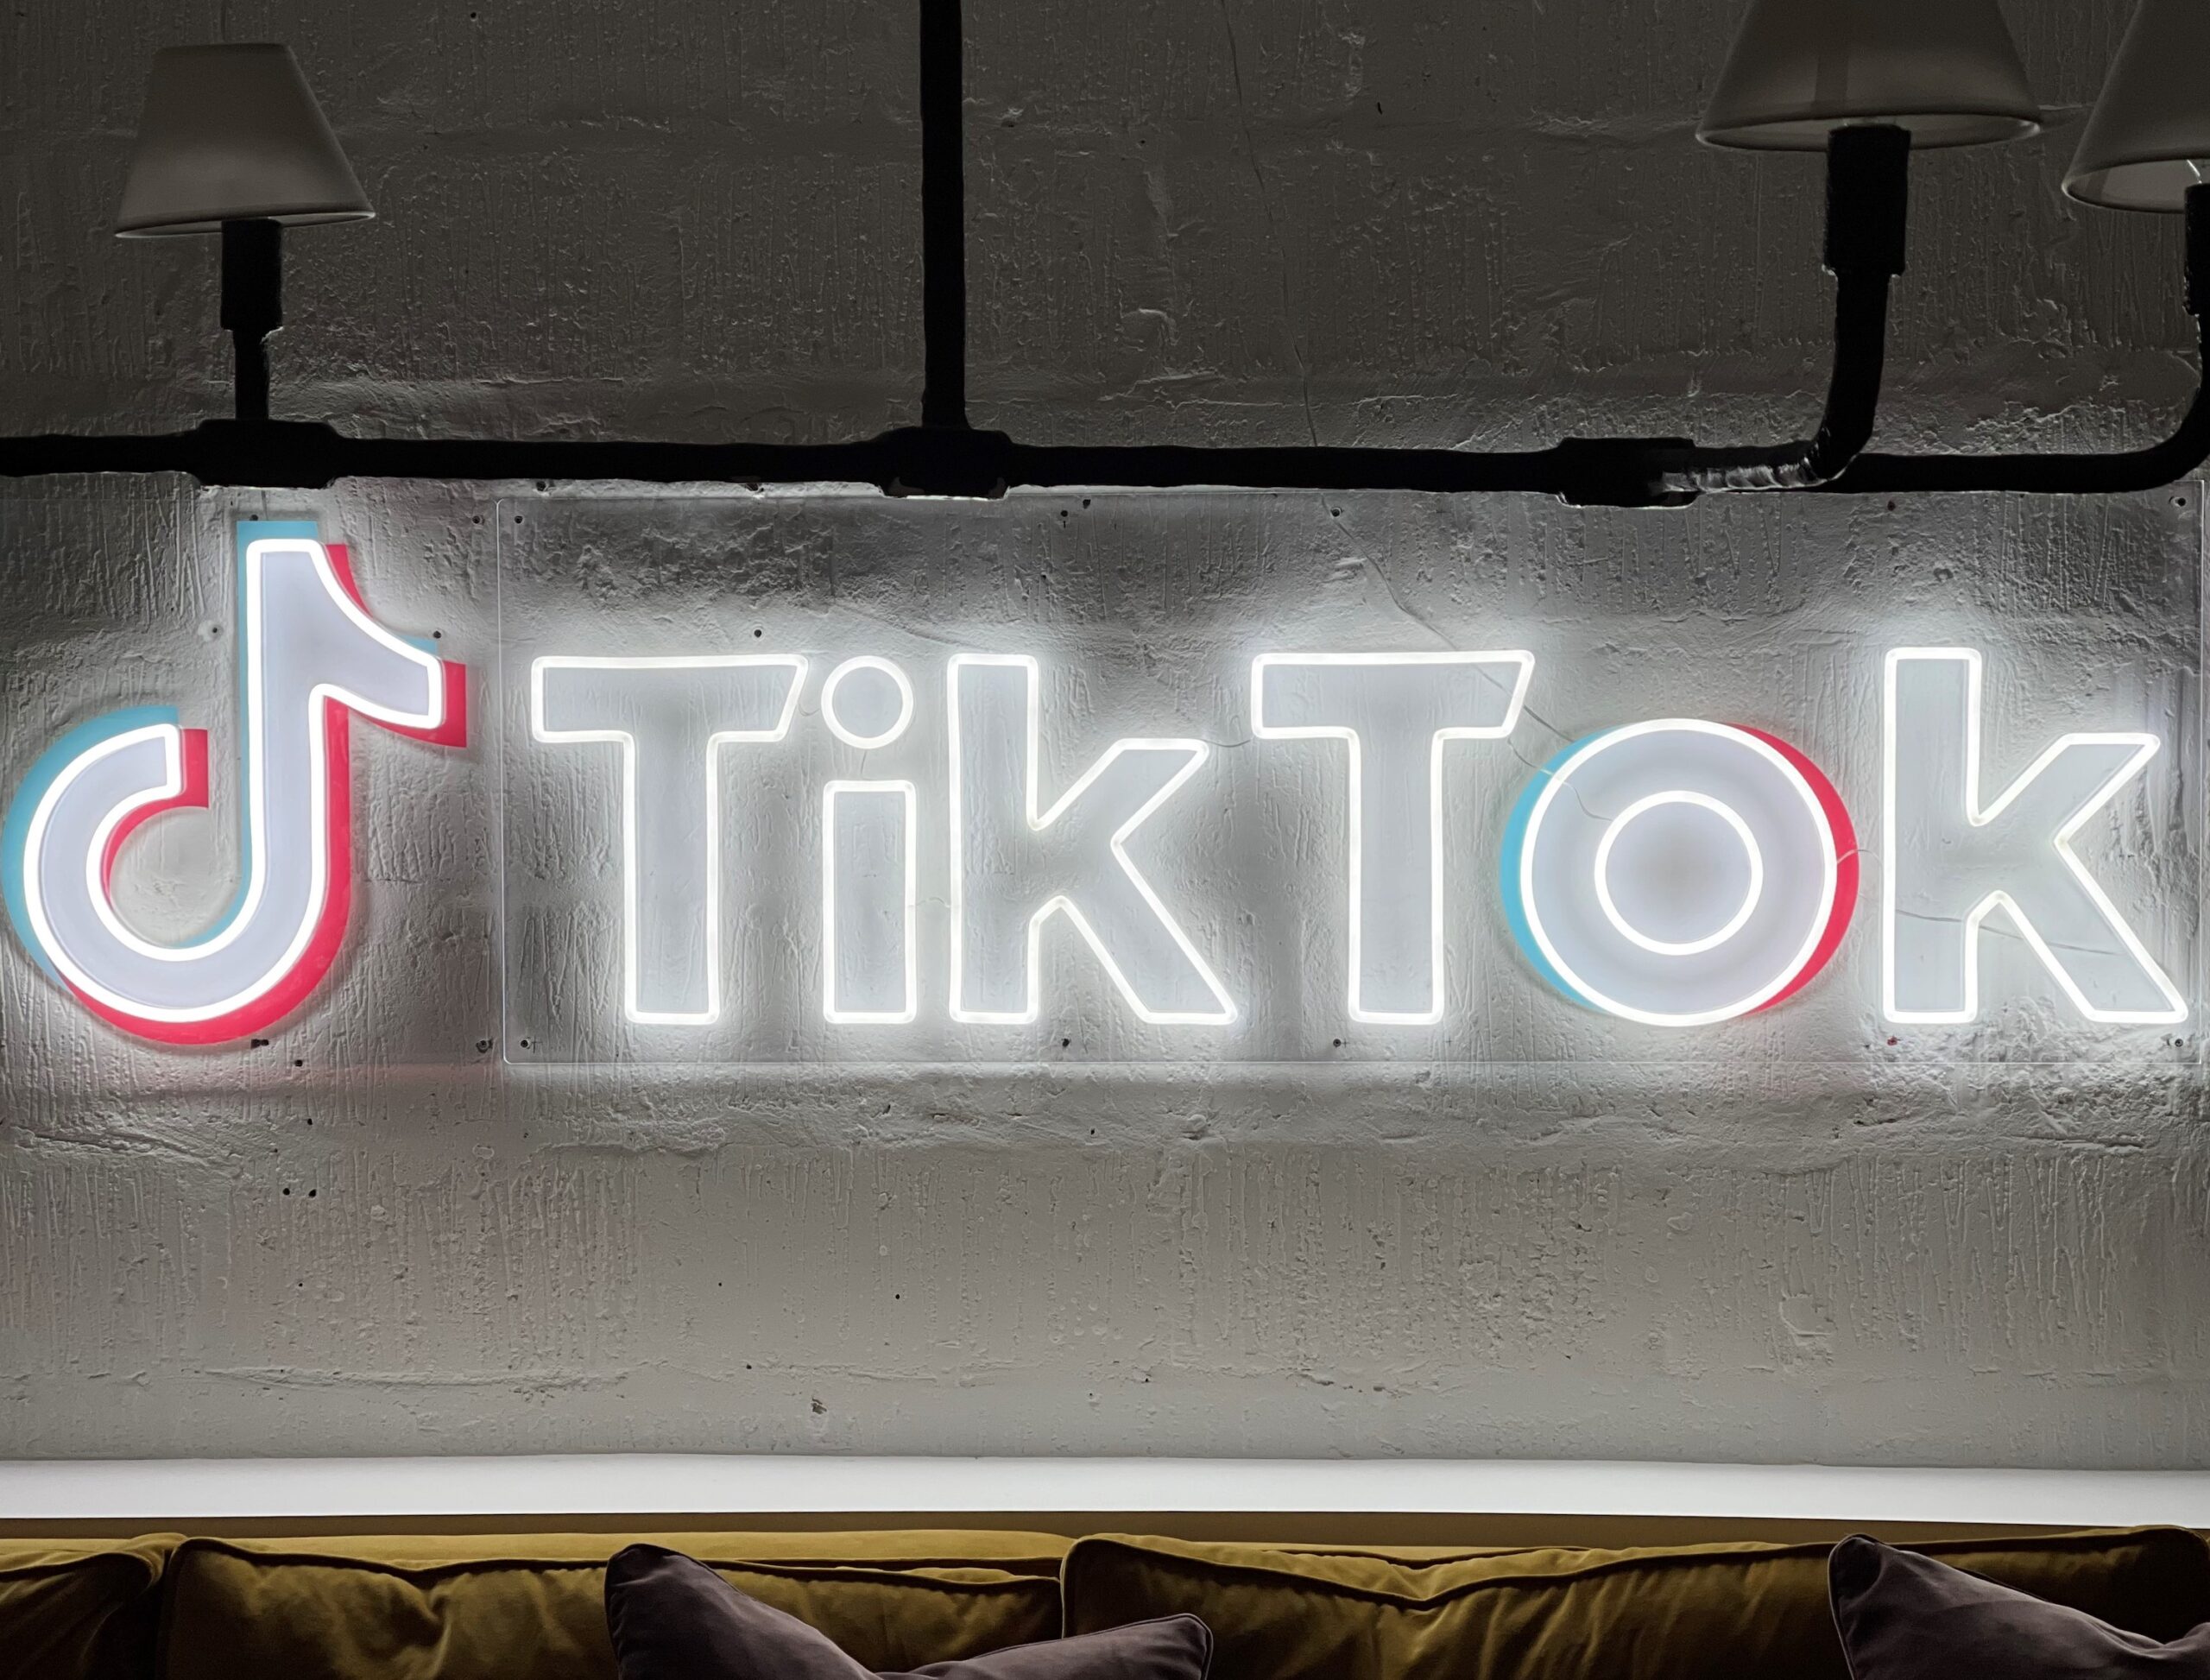 Tik Tok signage